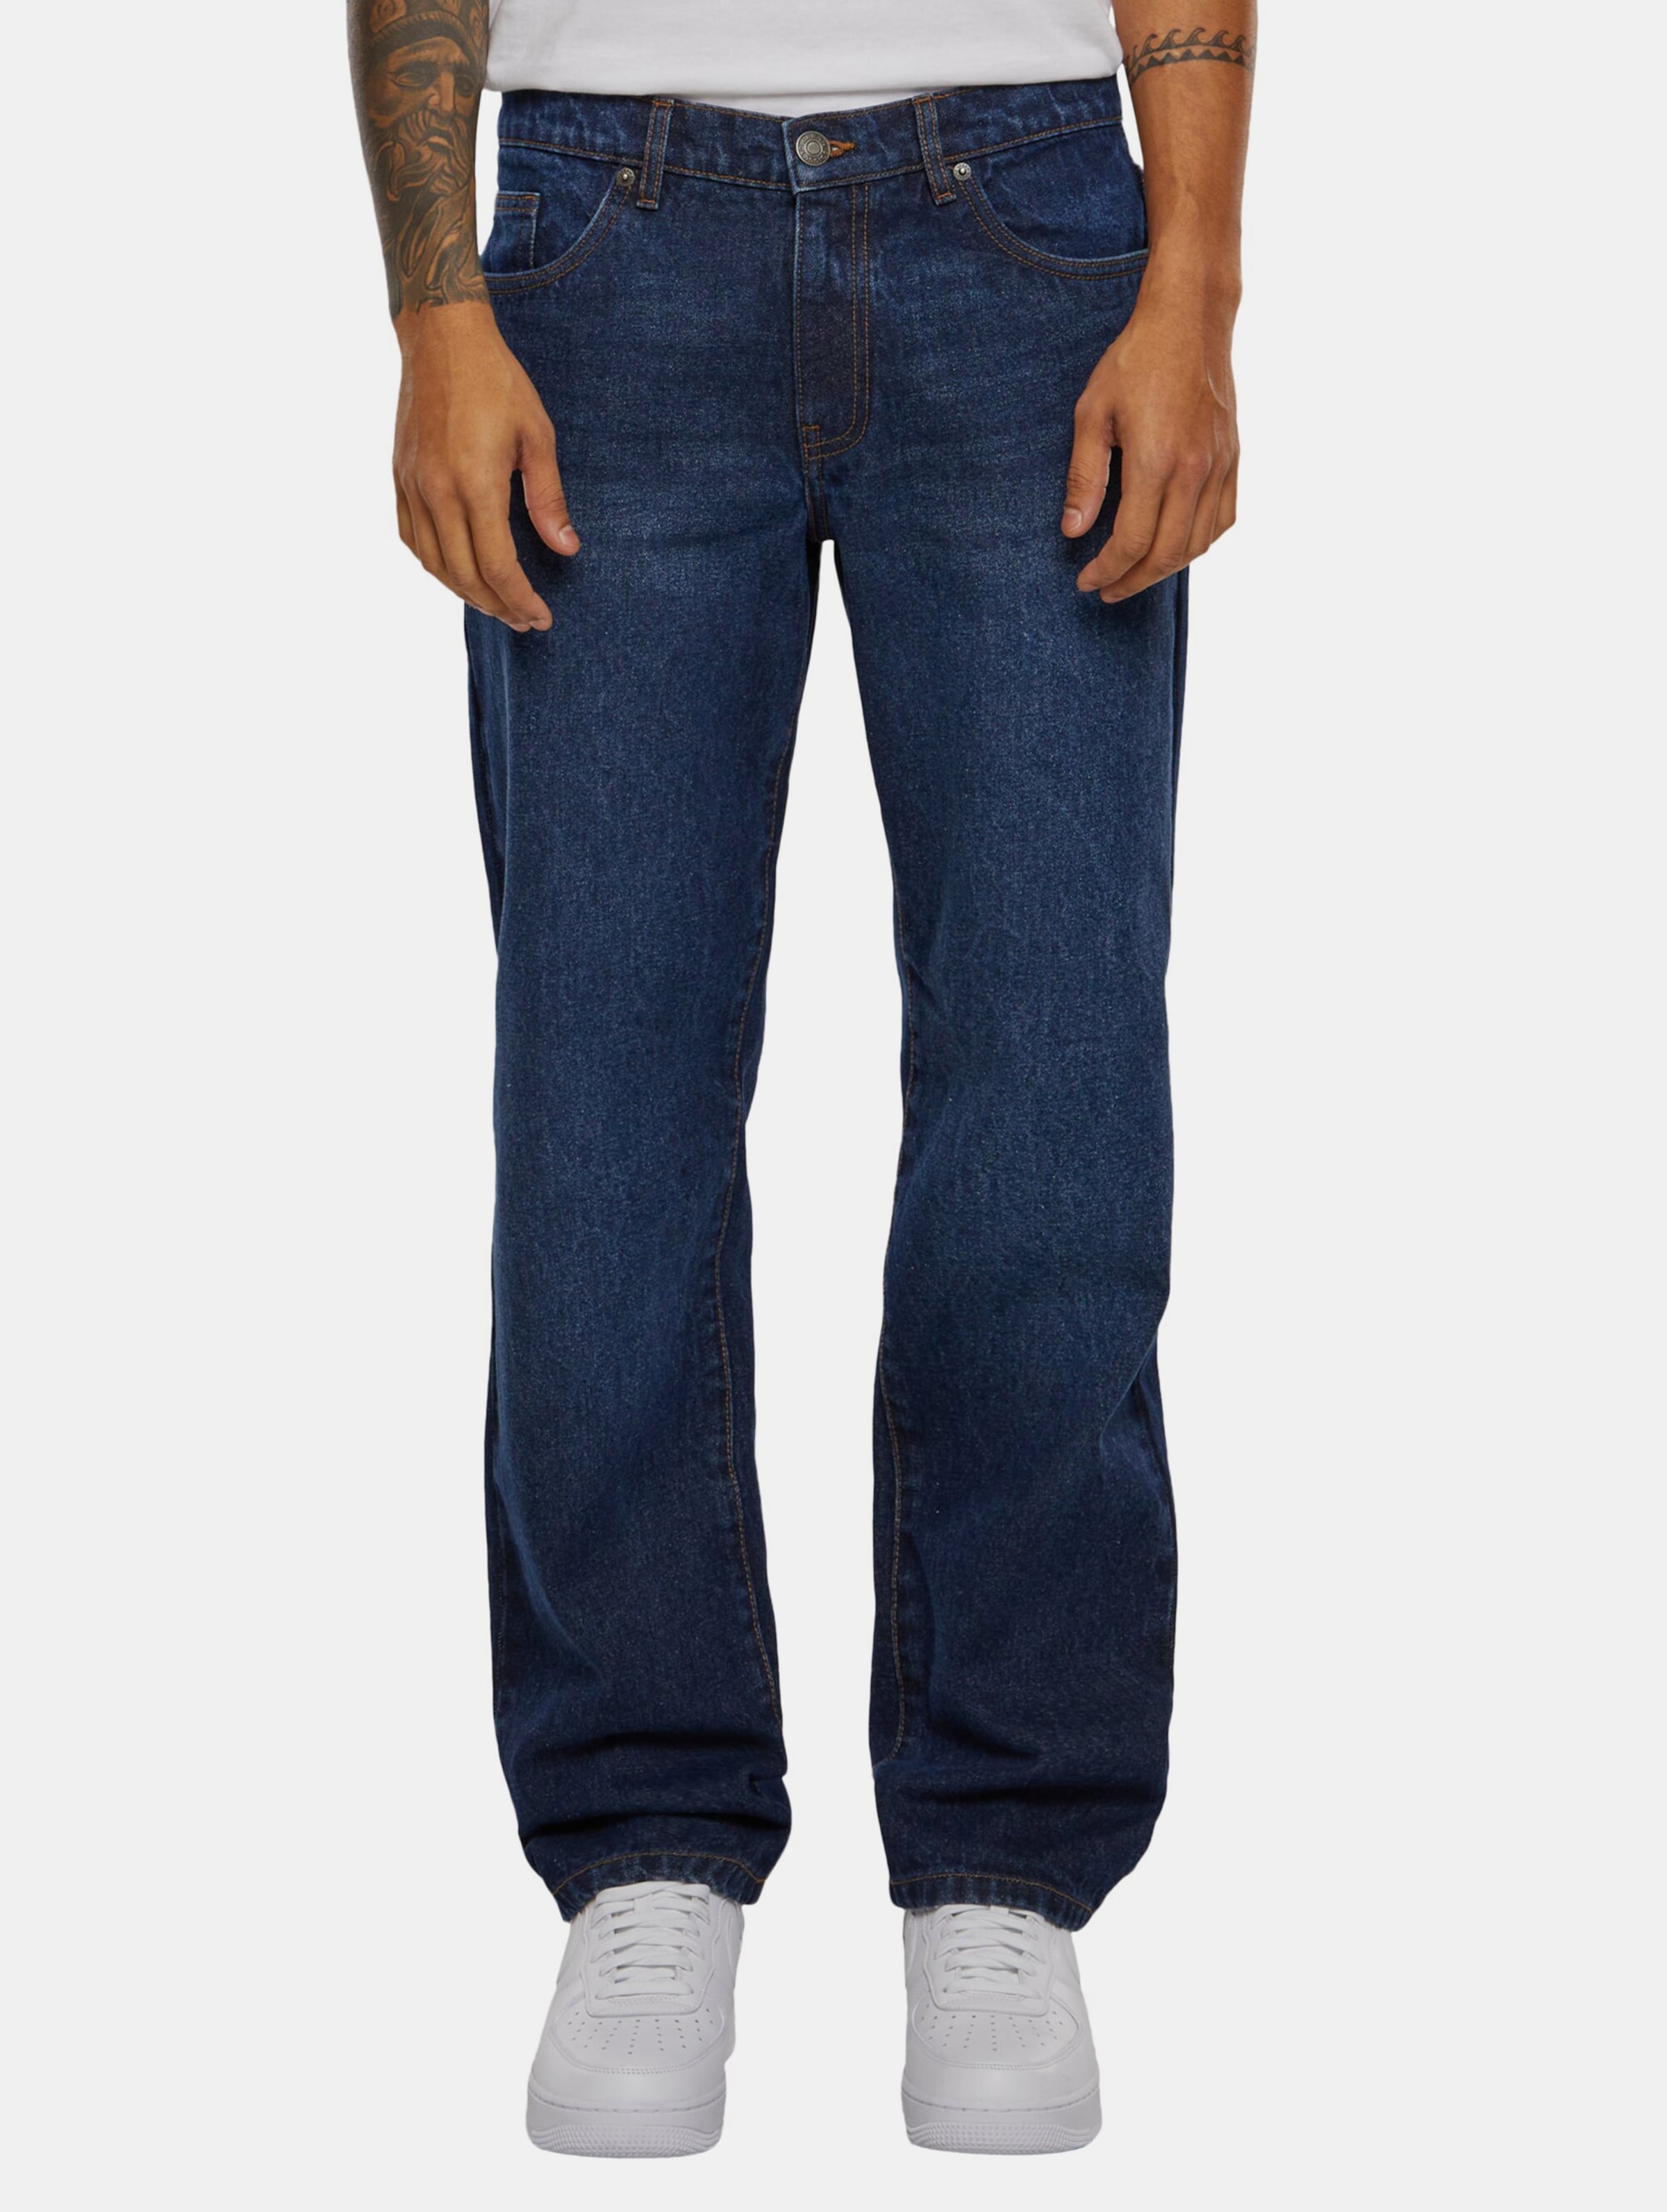 Urban Classics - Heavy Ounce Jeans Broek rechte pijpen - Taille, 36 inch - Blauw